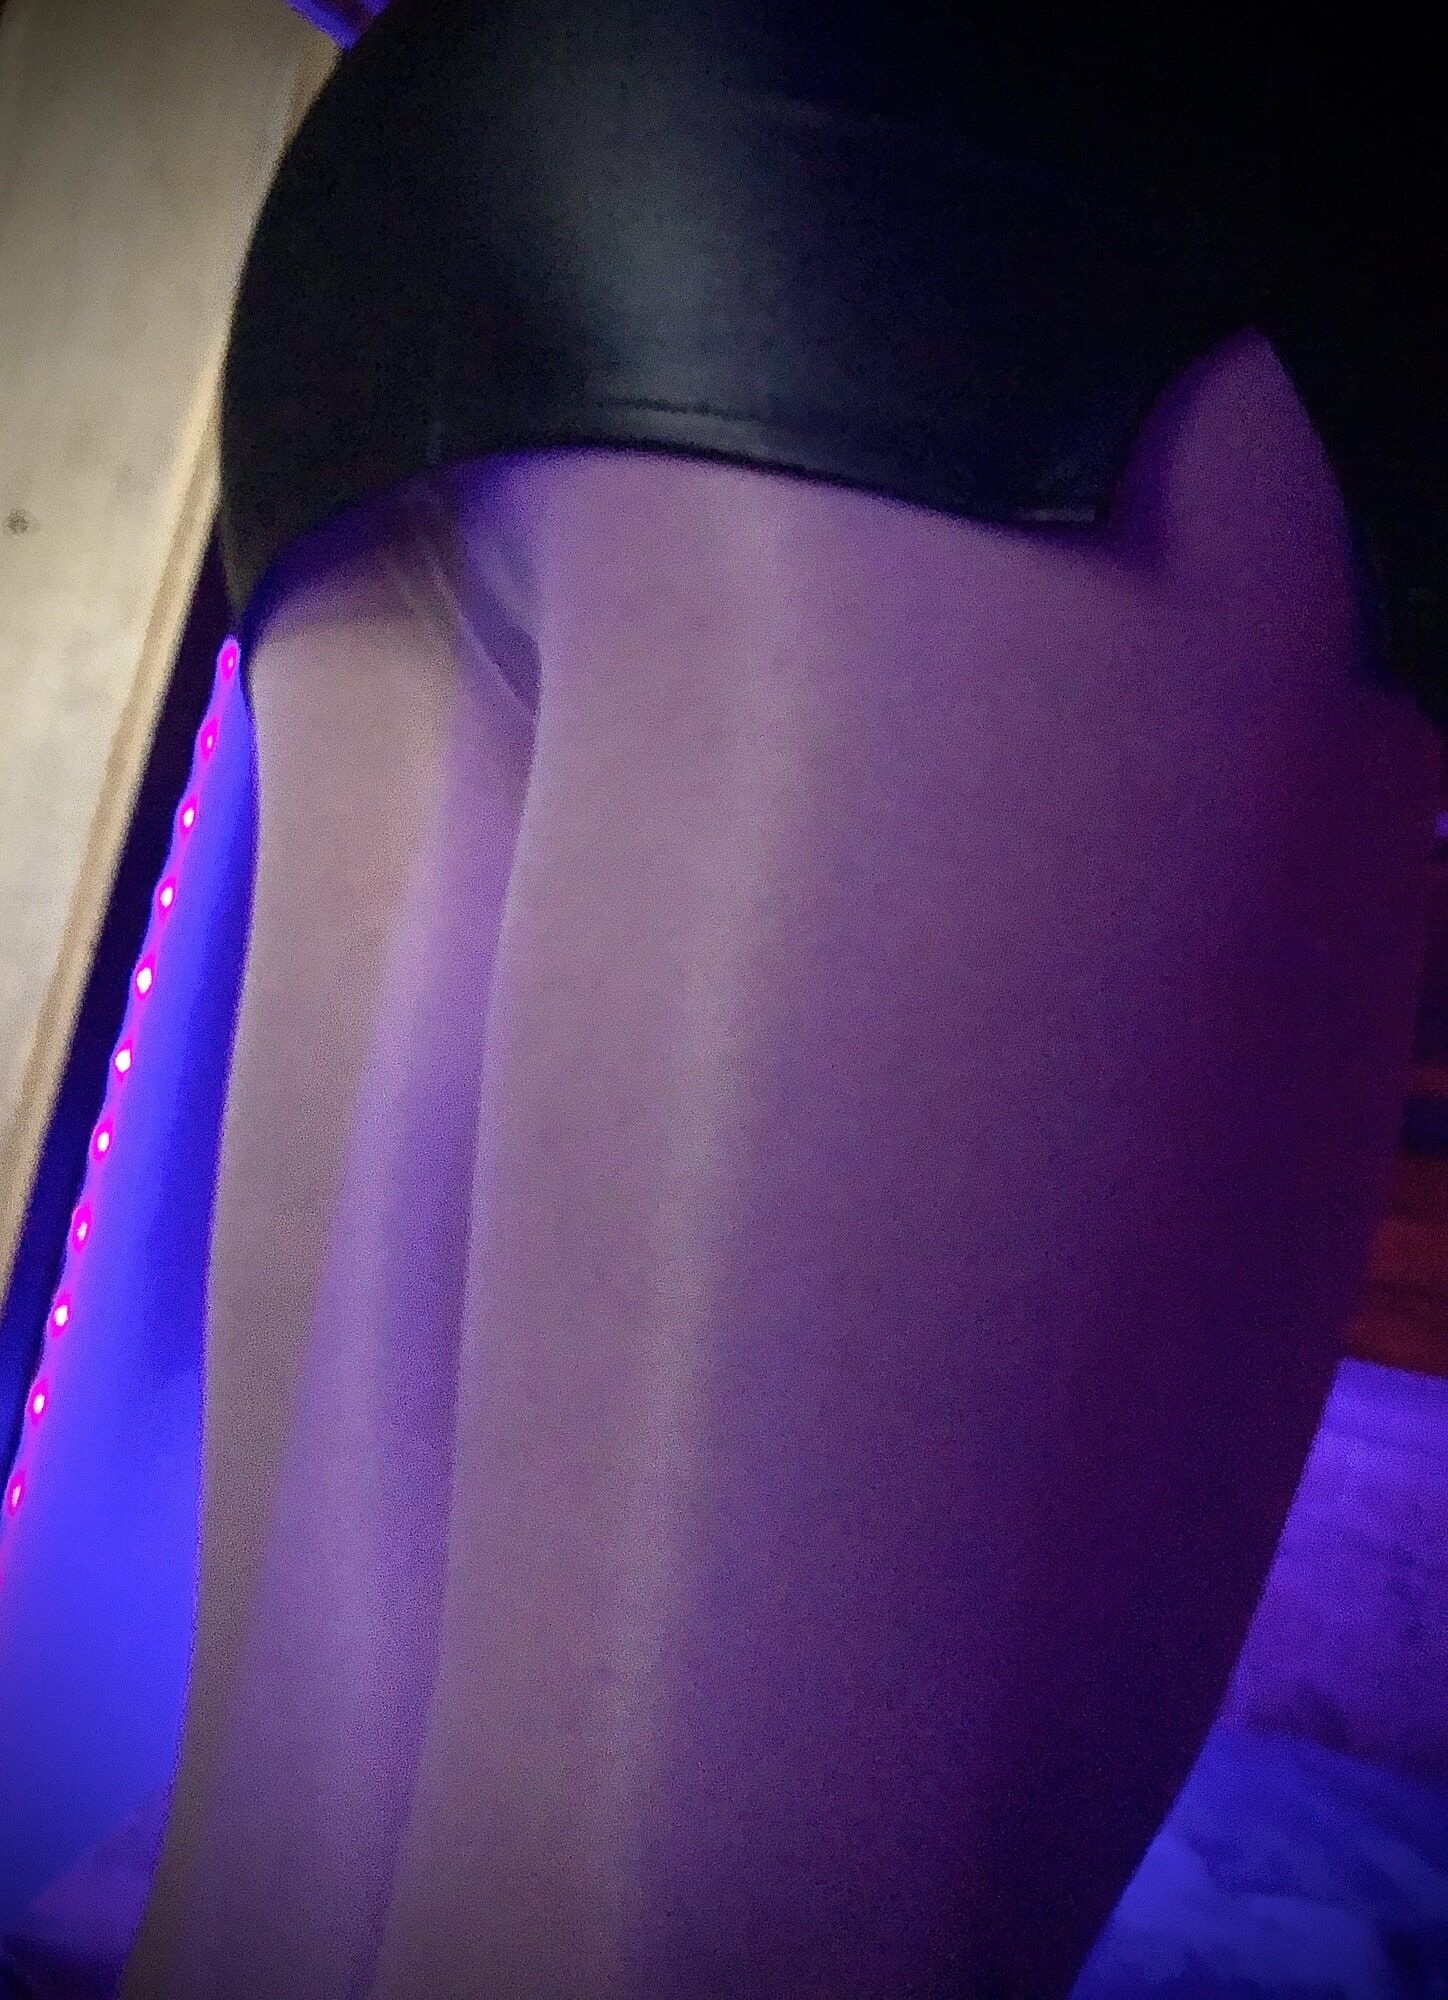 My legs on shiny pantyhose! #29